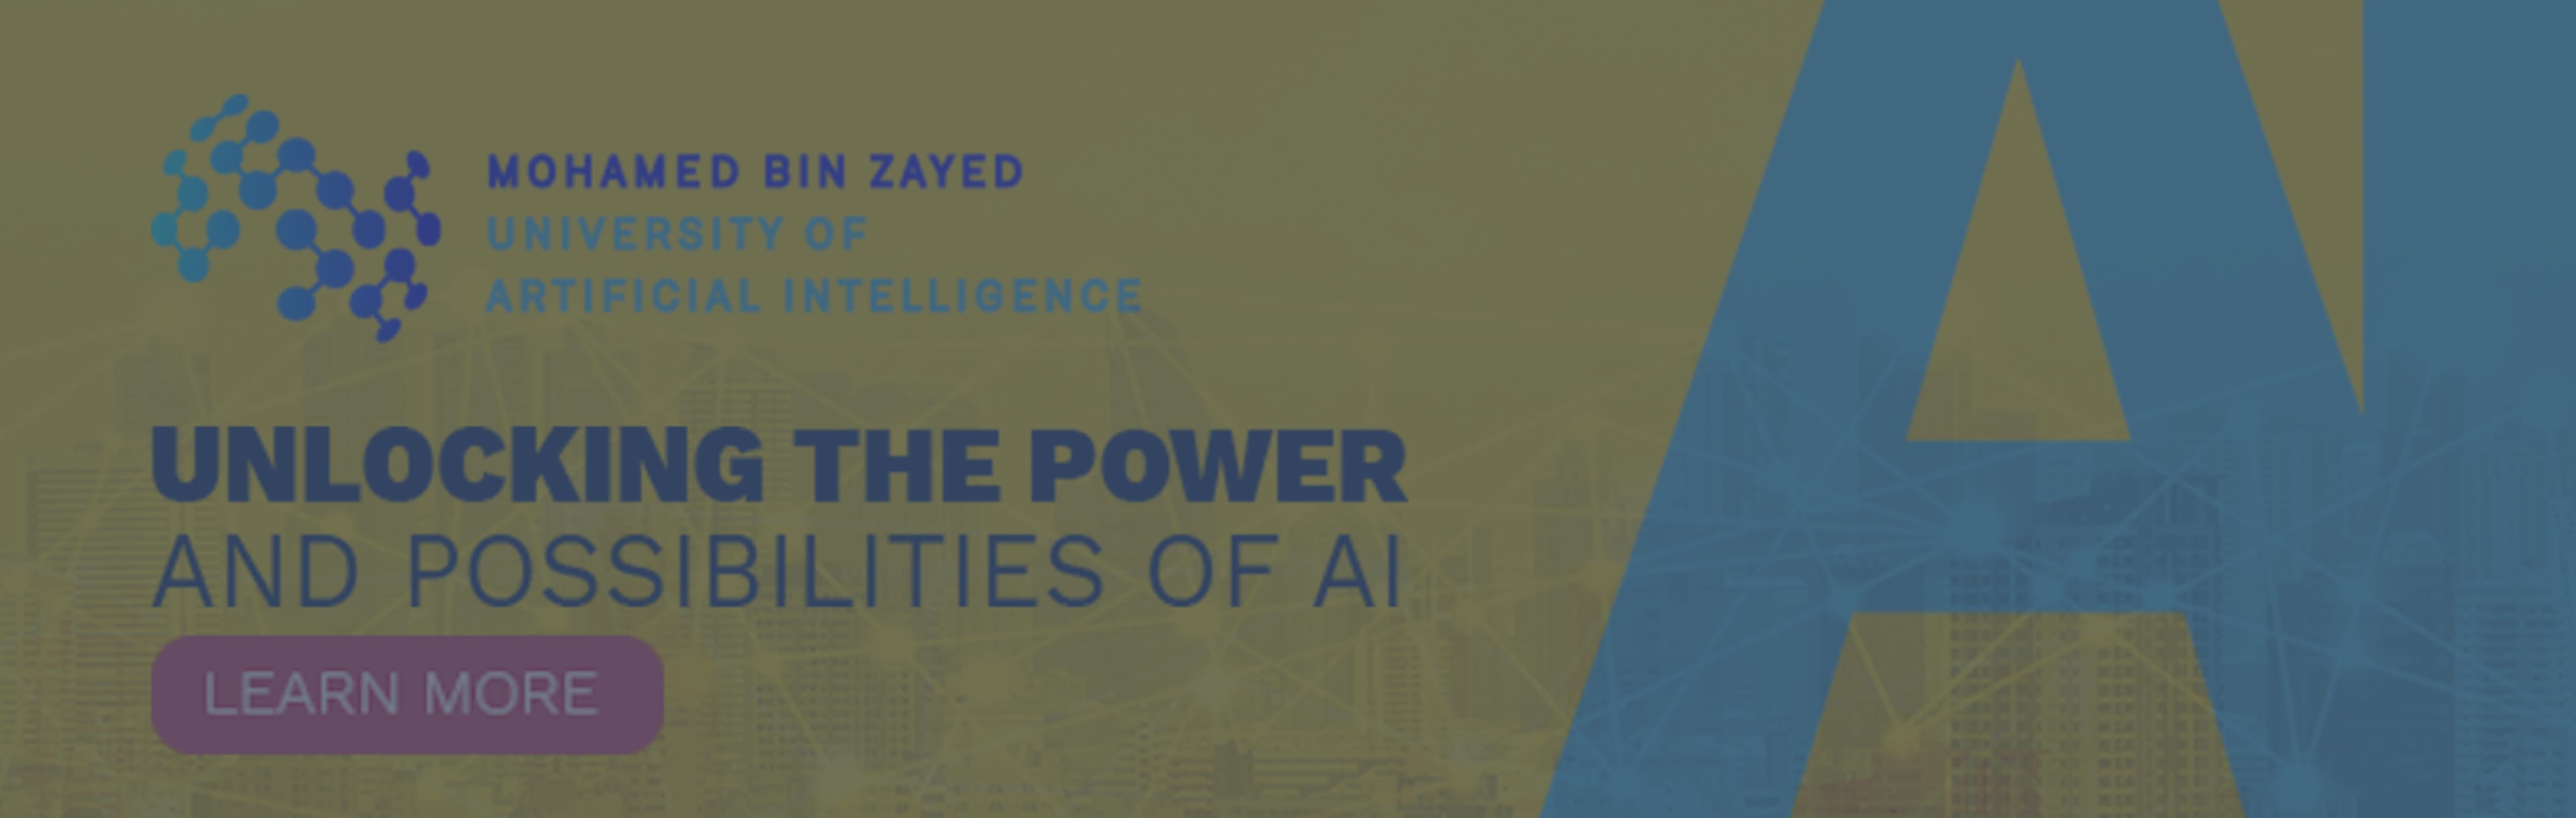 Mohamed bin Zayed University of Artificial Intelligence - MBZUAI